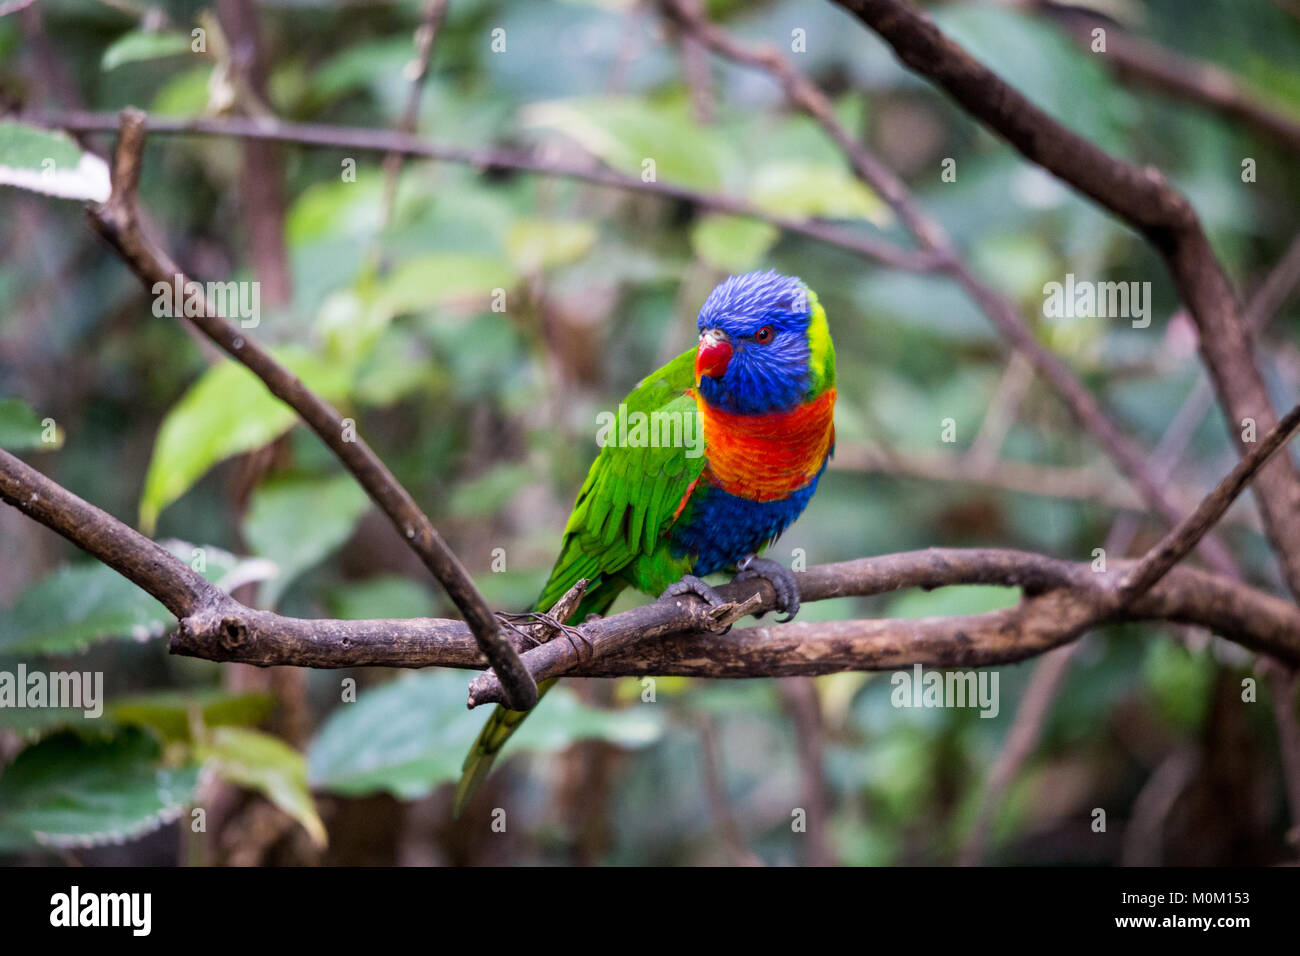 Colorful Rainbow Lorikeet Parrot sitting in Branch, Australia Stock Photo